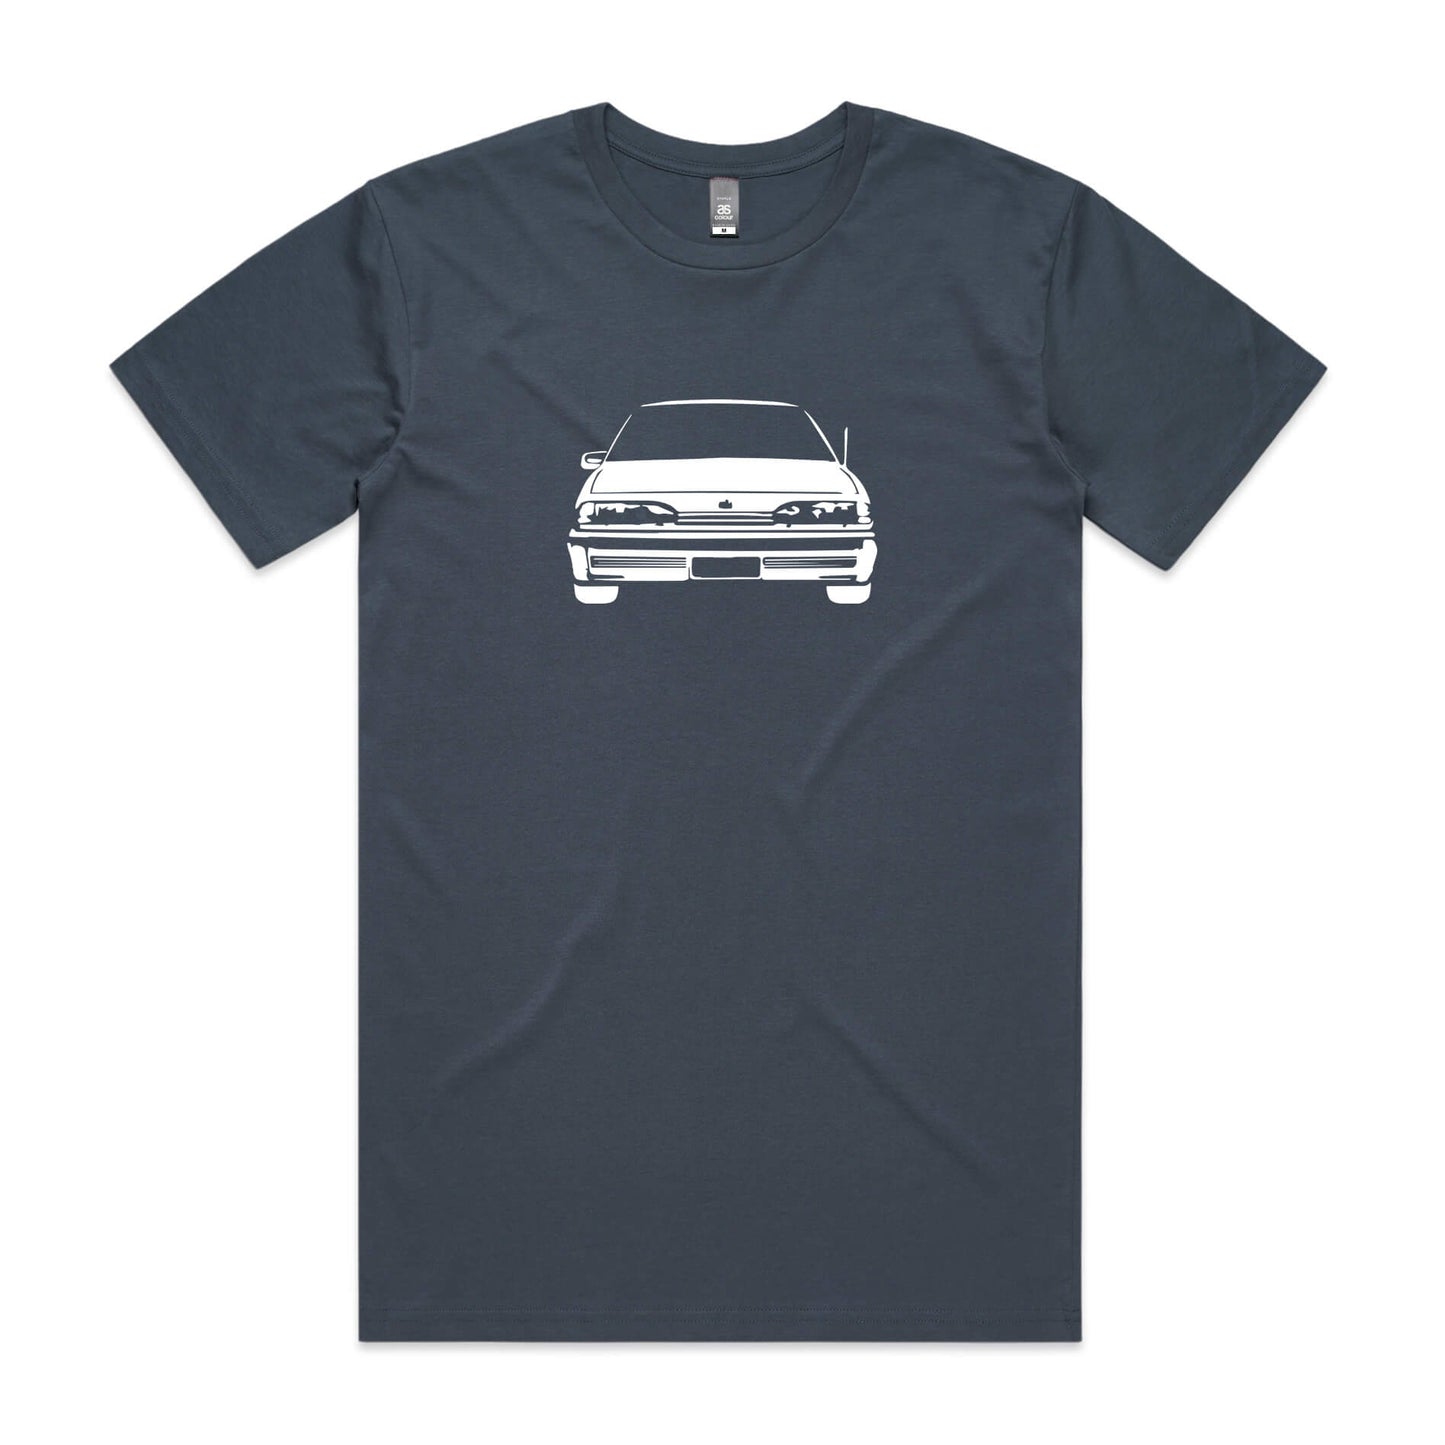 Holden VL Commodore T-Shirt